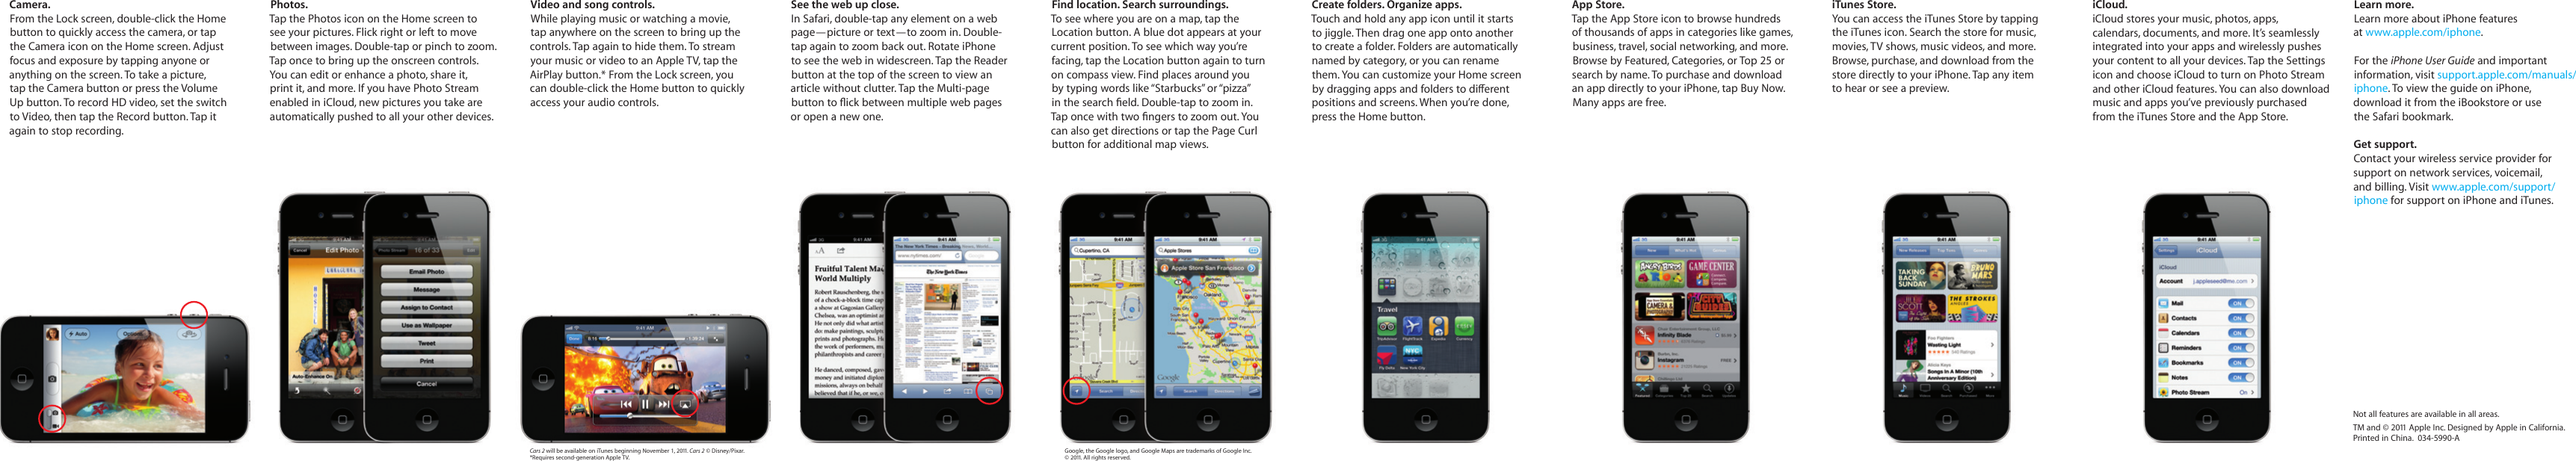 Apple Iphone 4s User Manual Free Download